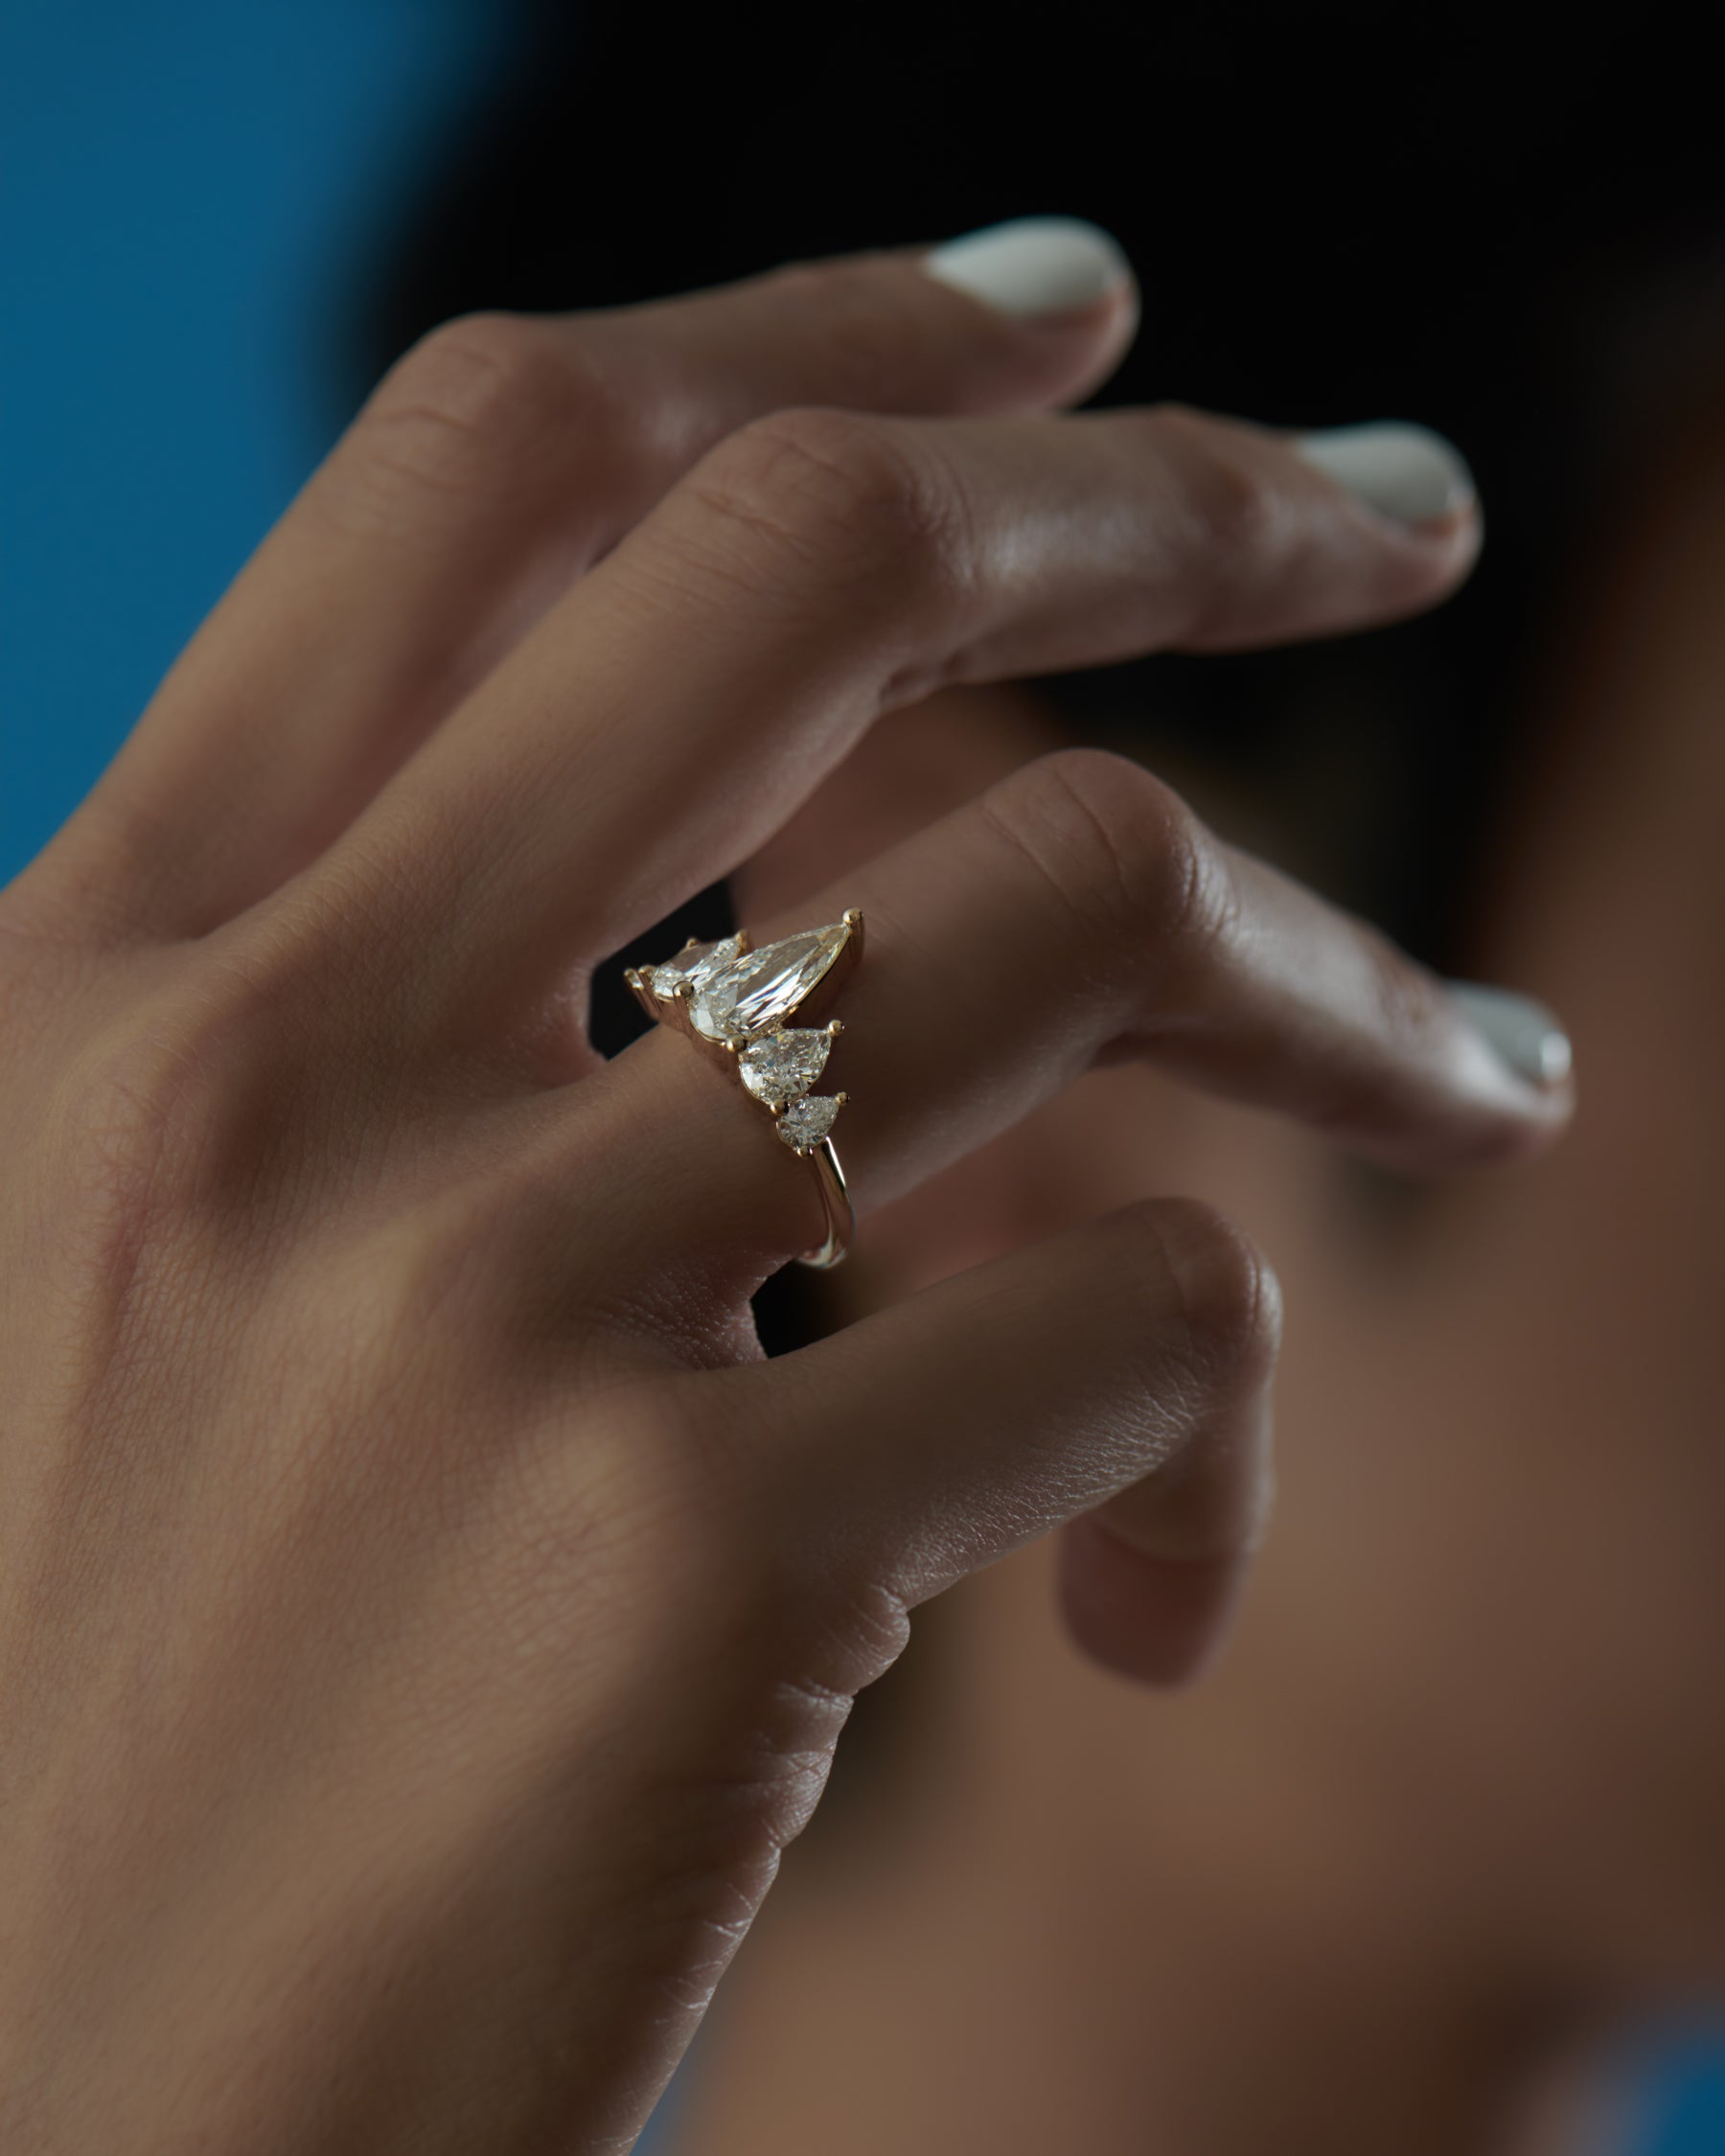 3.25cts Oval w/ Half Moon side stones engagement ring! • •  #wilsondiamondbrokers #ovalengagementring #ovaldiamond #custommade  #bridal... | Instagram